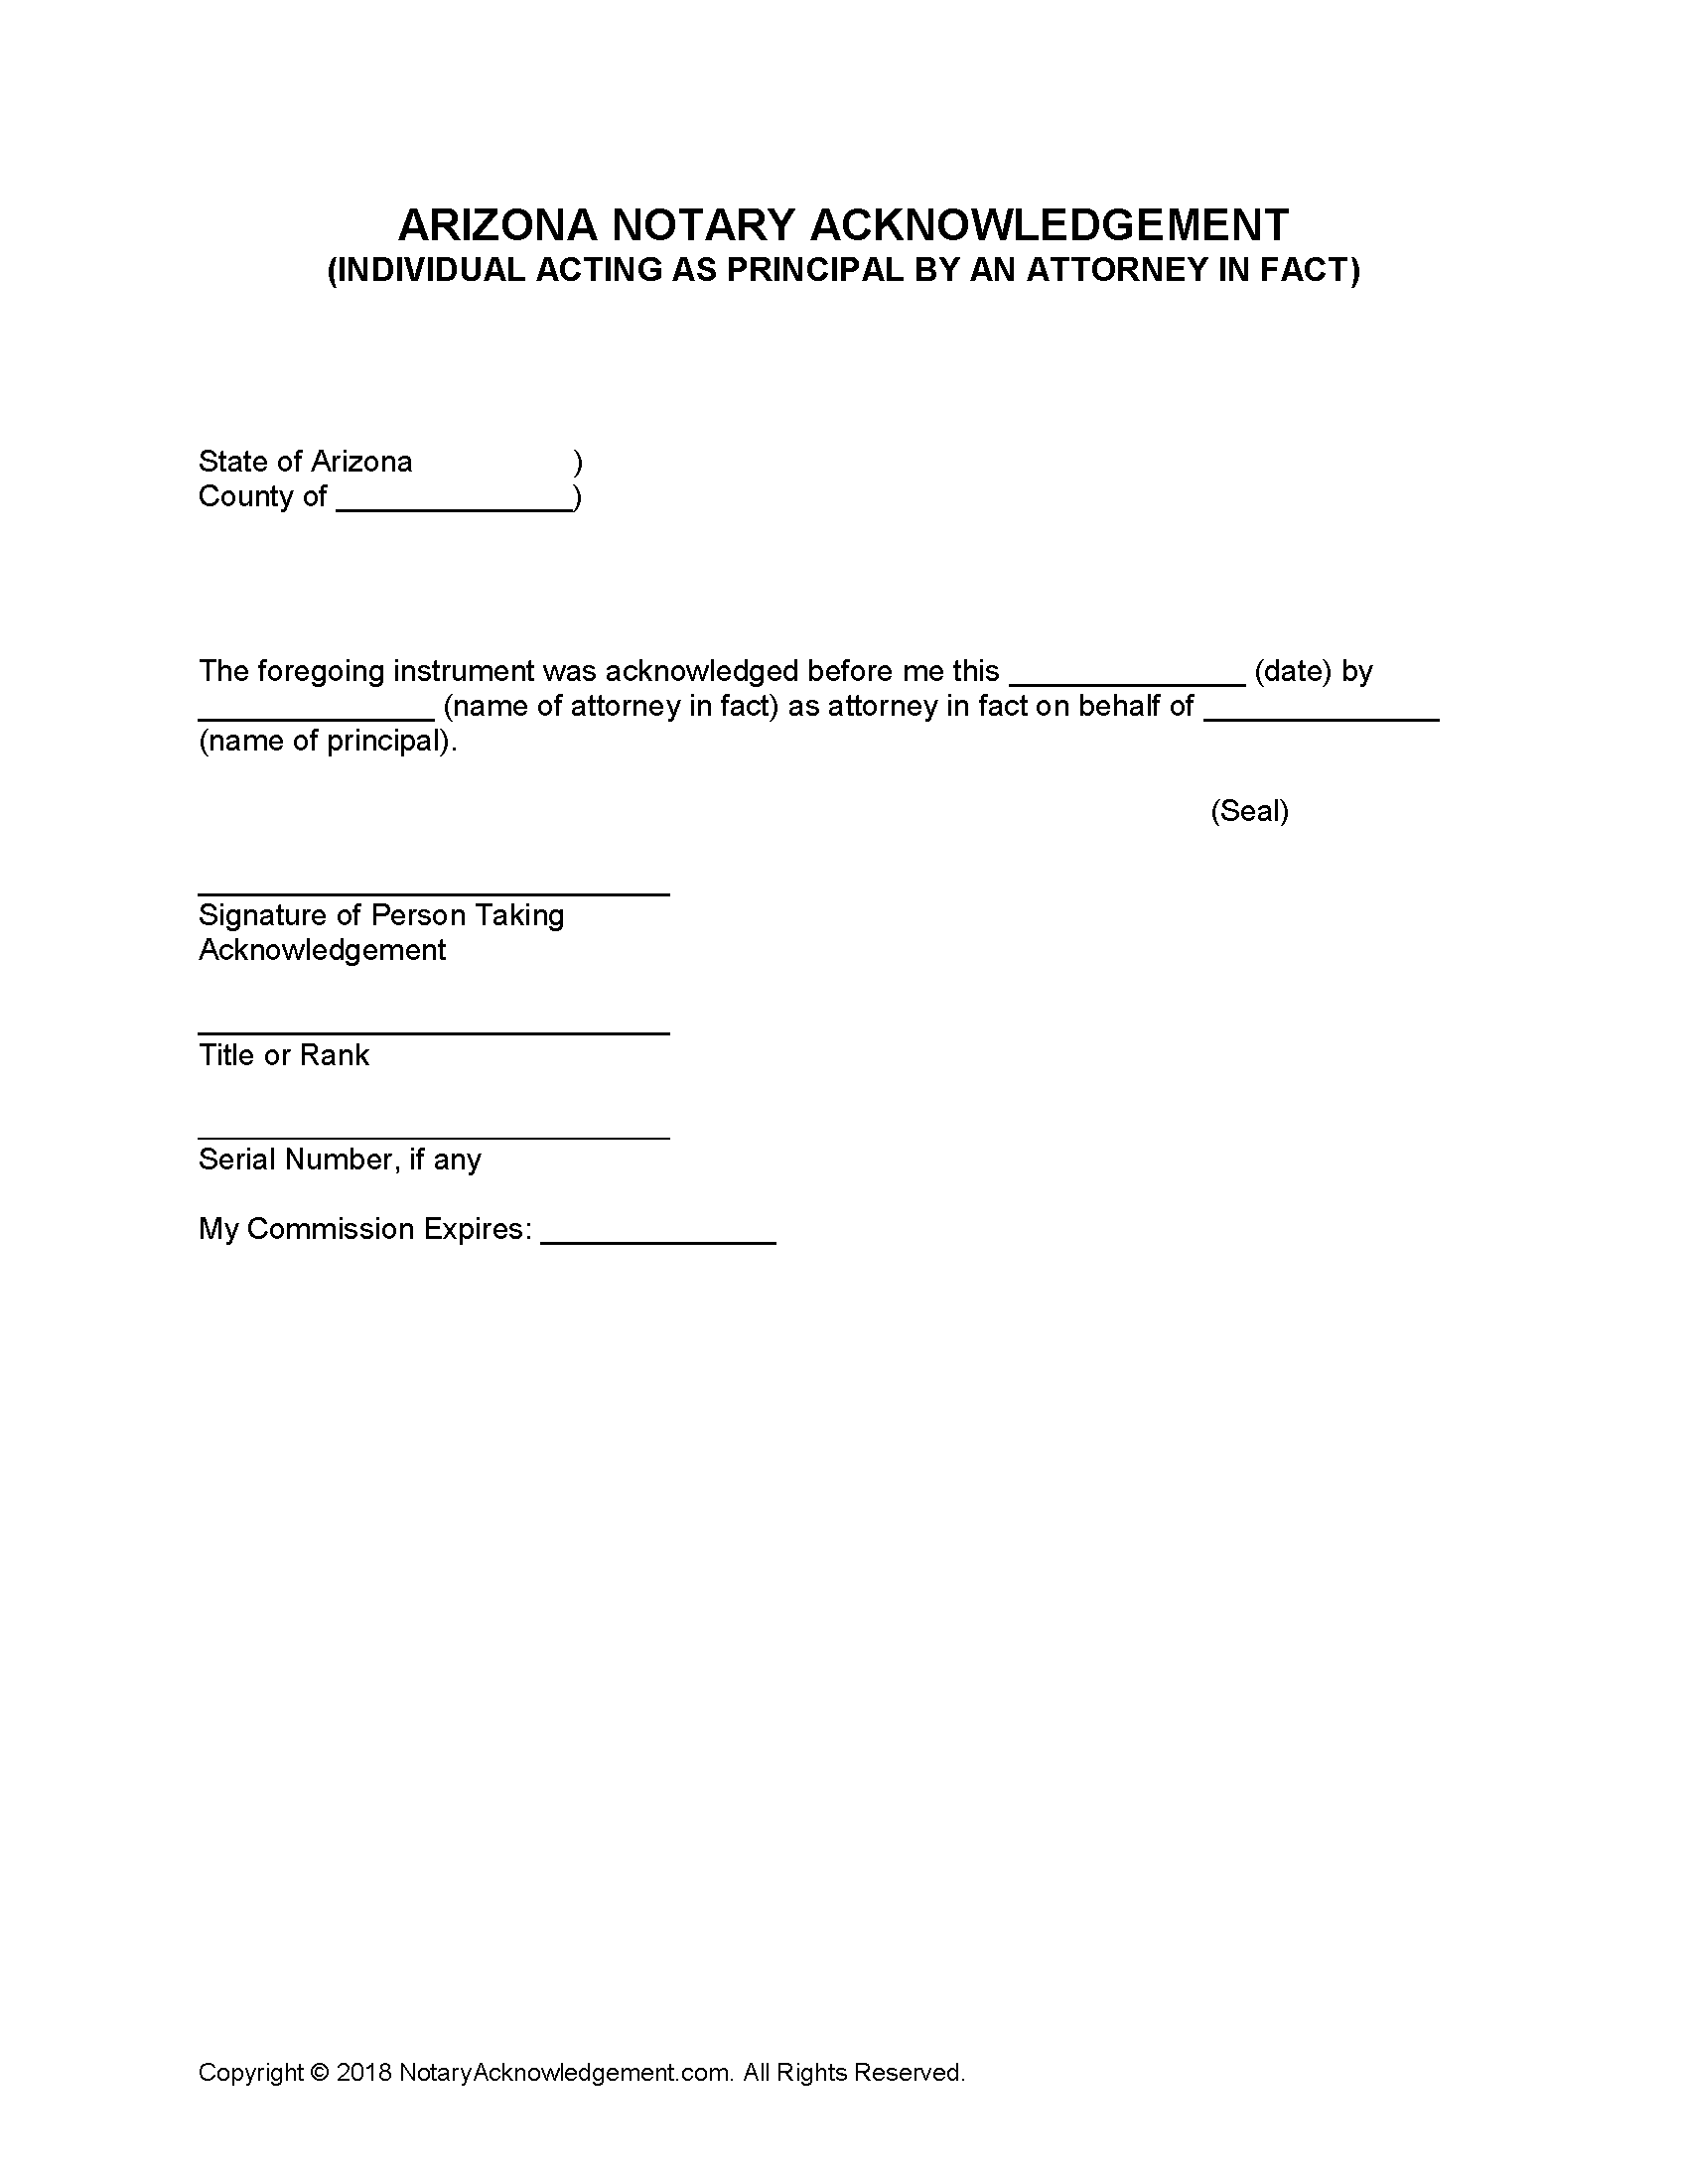 free-arizona-notary-acknowledgement-individual-acting-as-principal-by